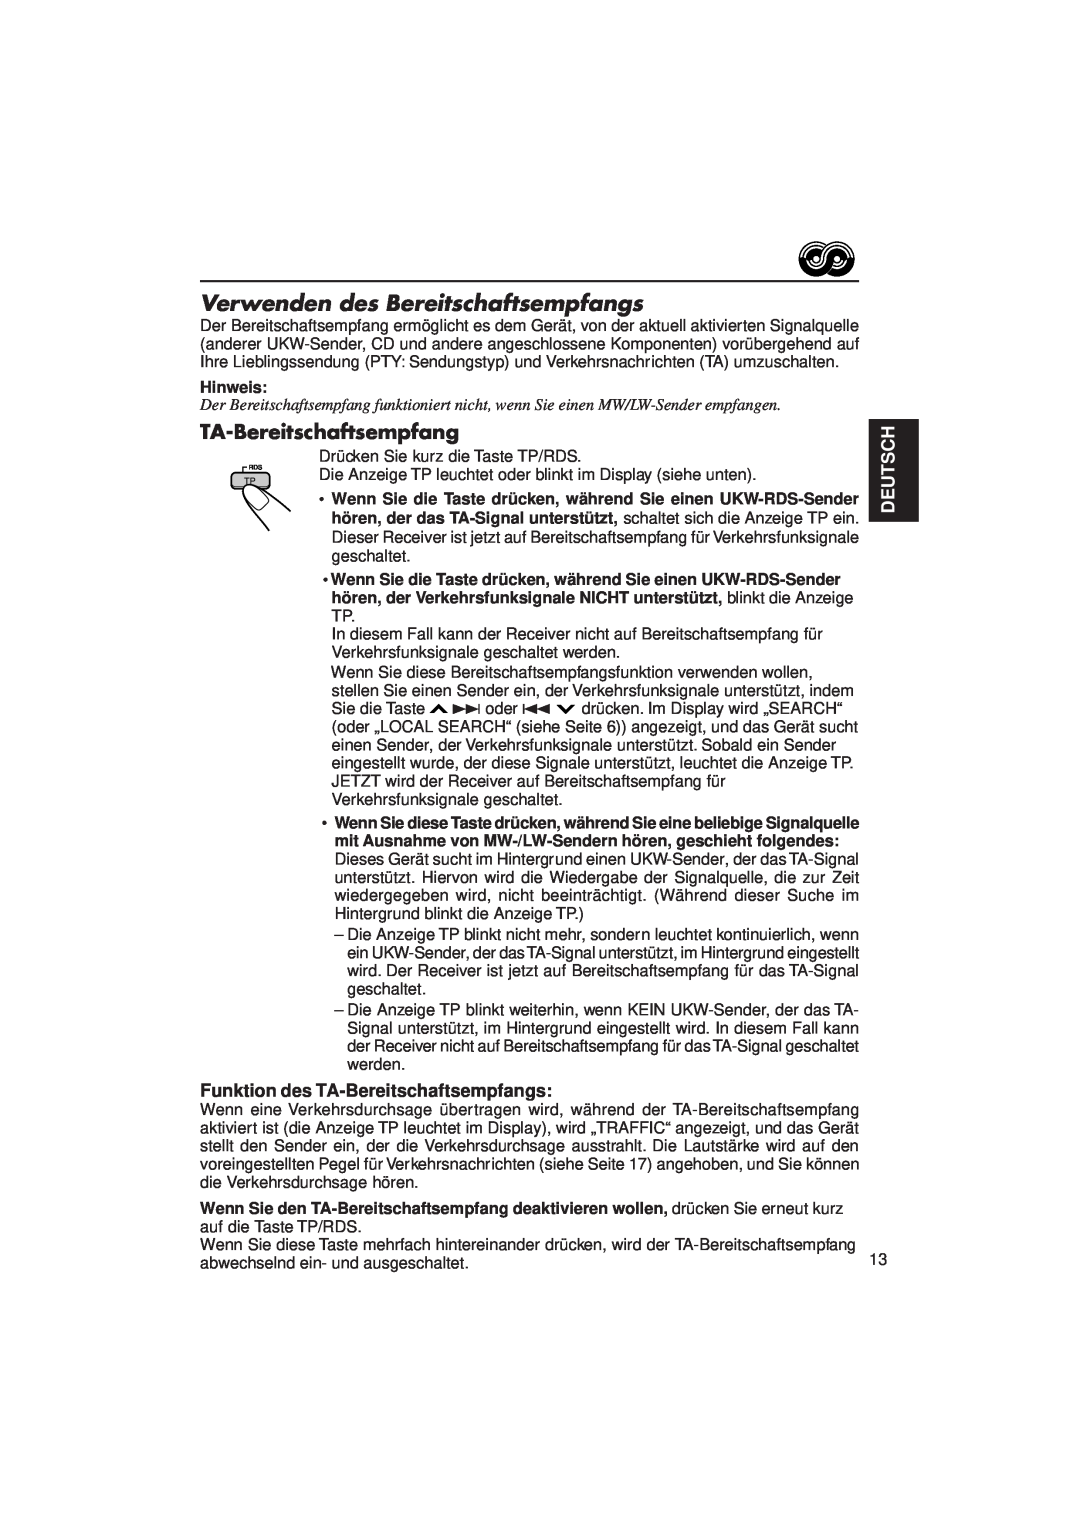 JVC KD-LX3R manual Verwenden des Bereitschaftsempfangs, Funktion des TA-Bereitschaftsempfangs, Deutsch, Hinweis 